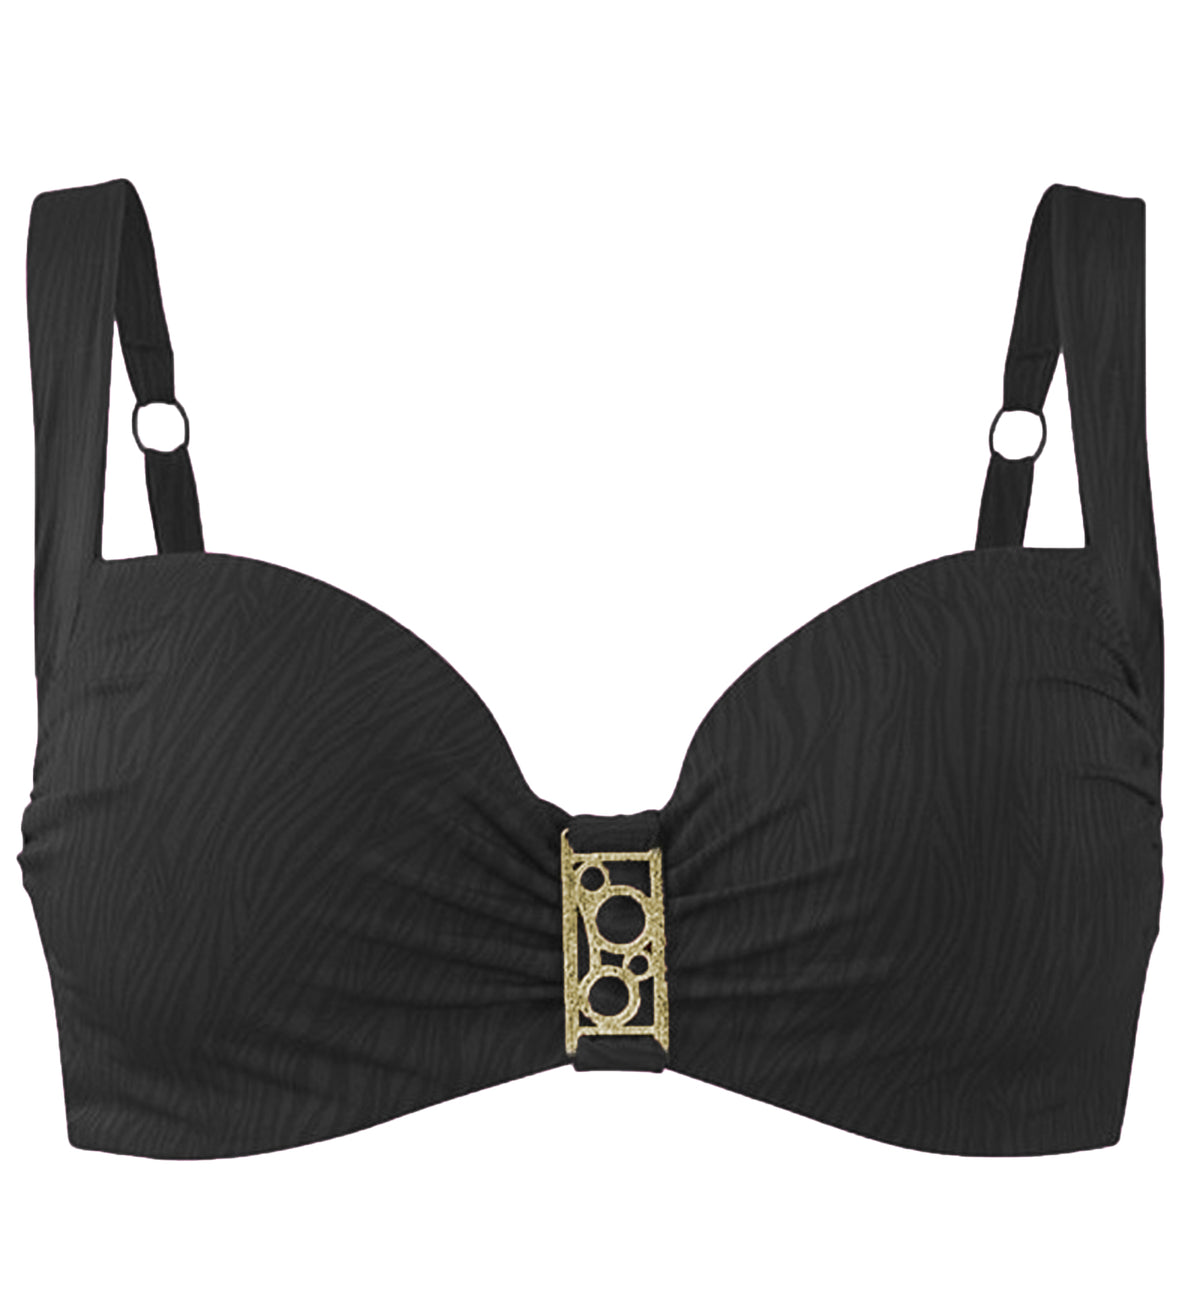 Panache Lola Underwire Molded Bikini Top (SW0721),30D,Black - Black,30D